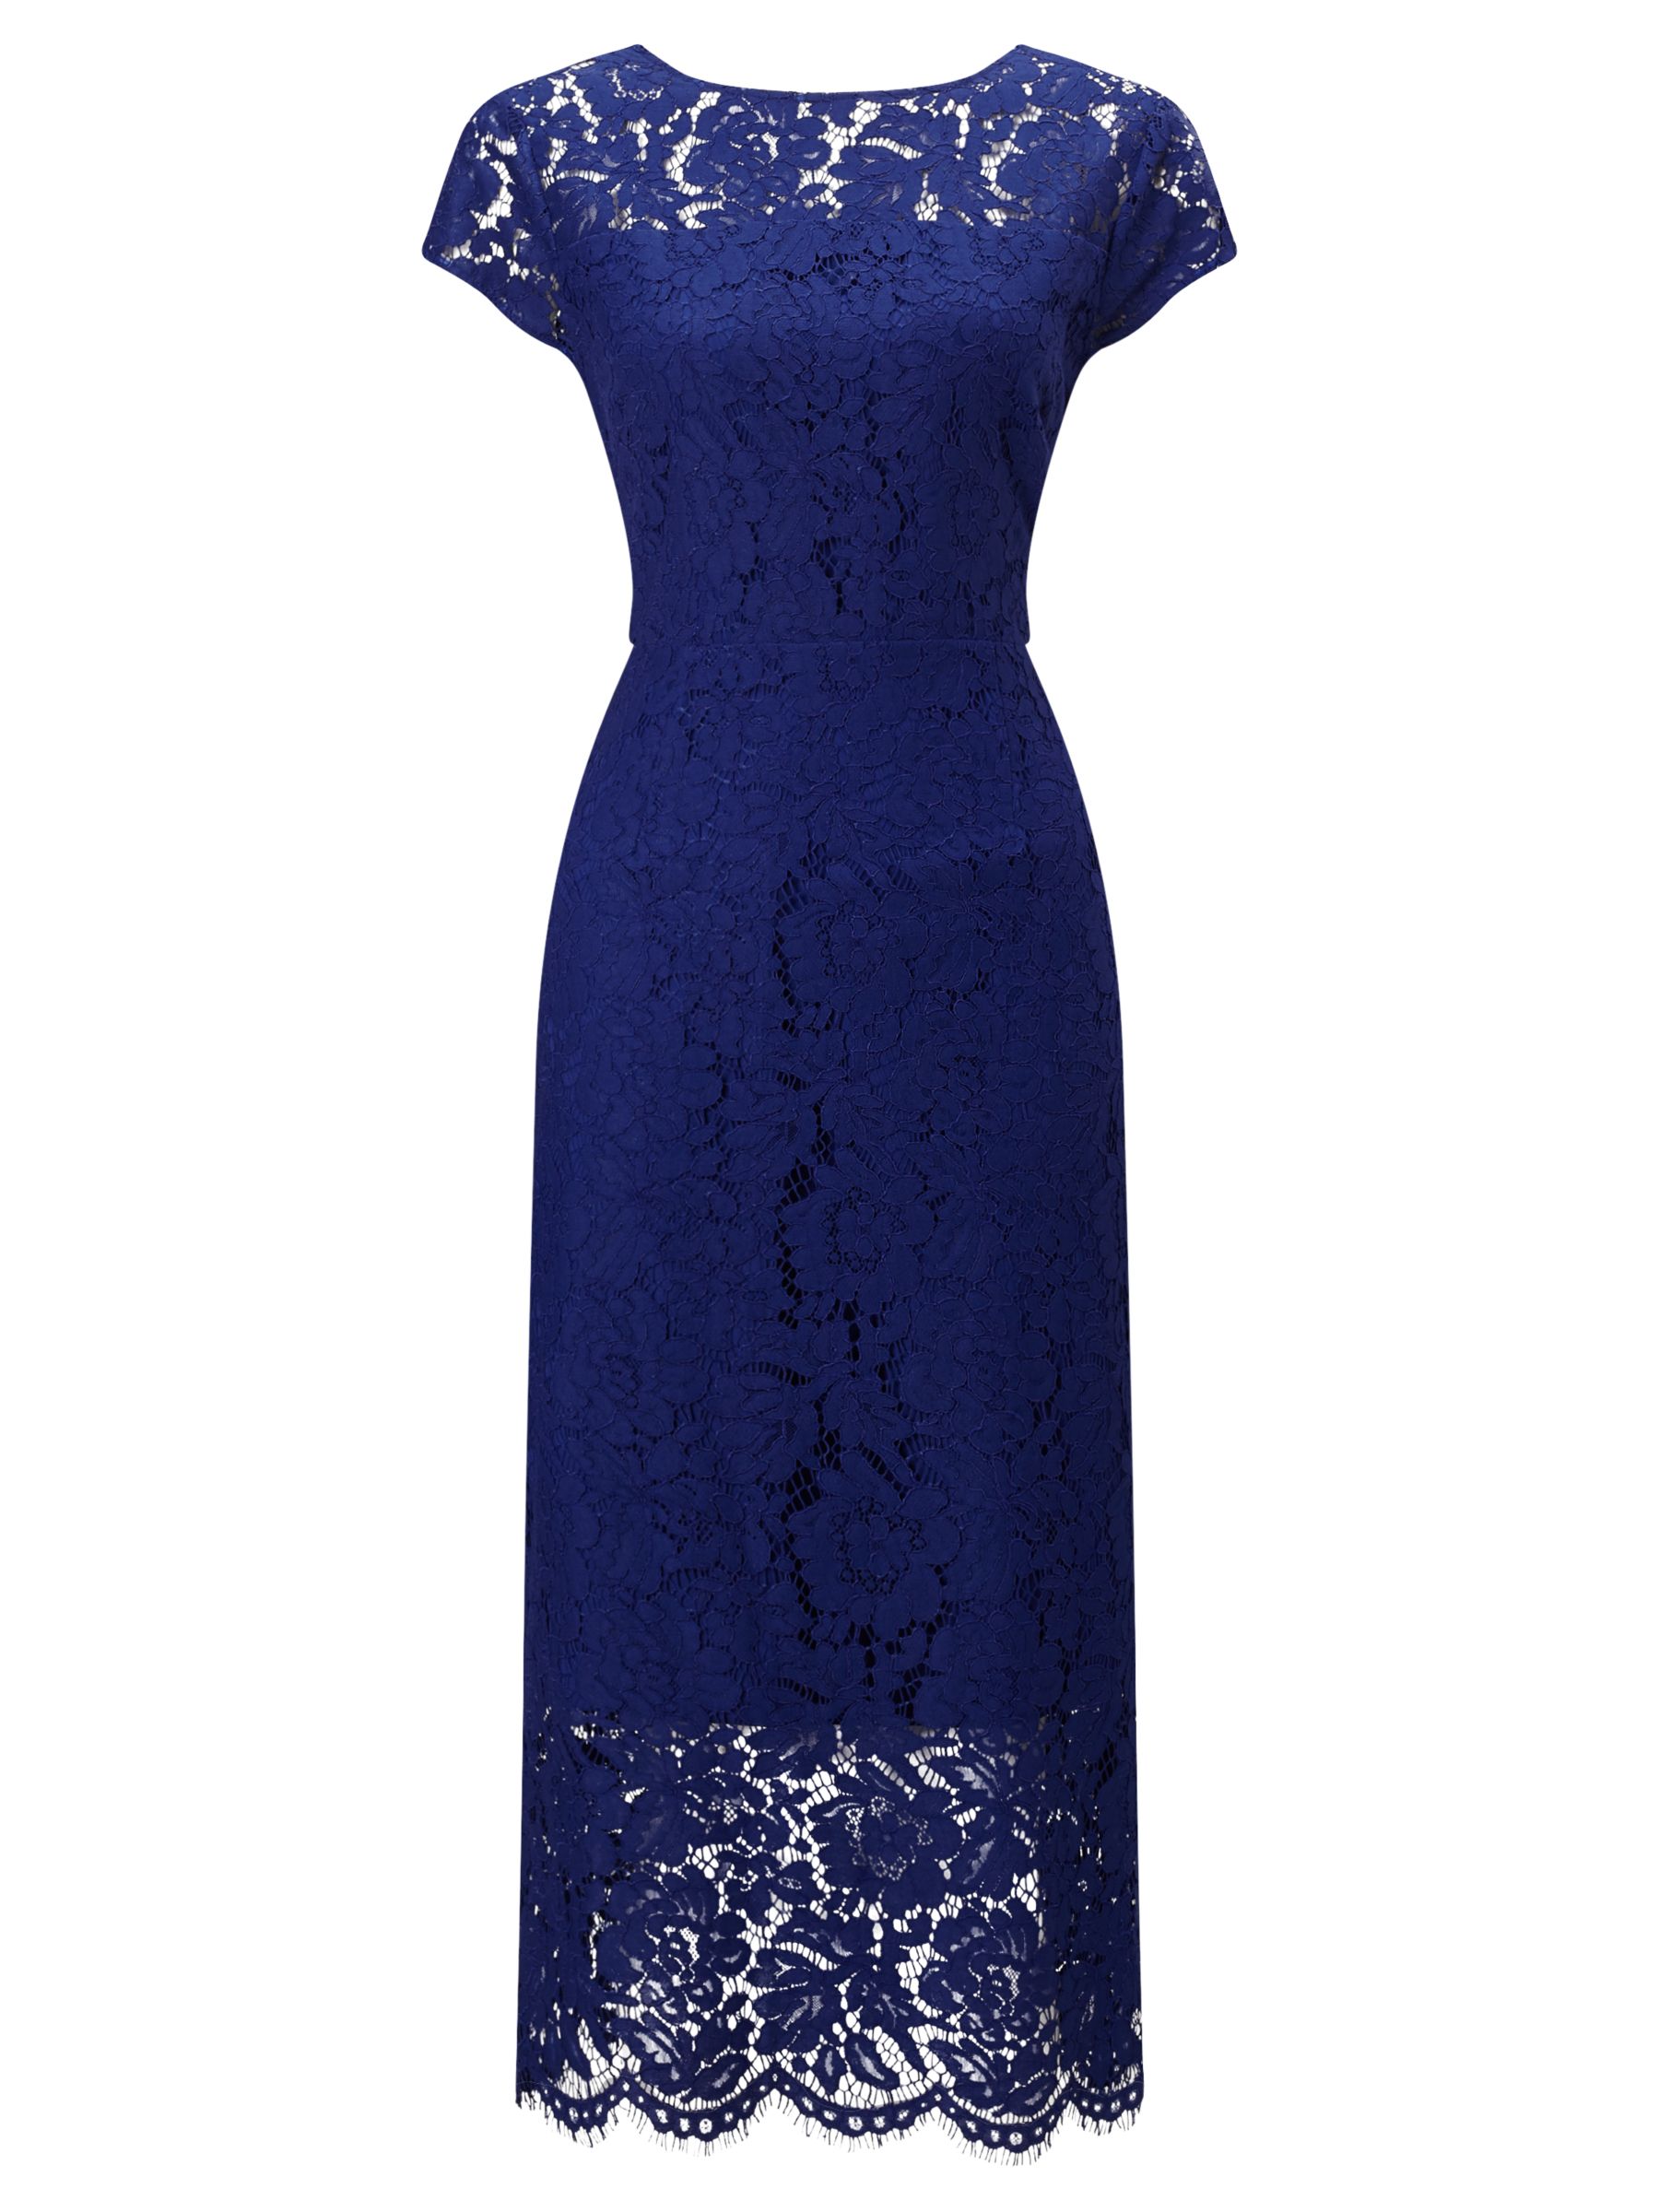 John Lewis & Partners Short Sleeve Lace Dress, Blue, 14